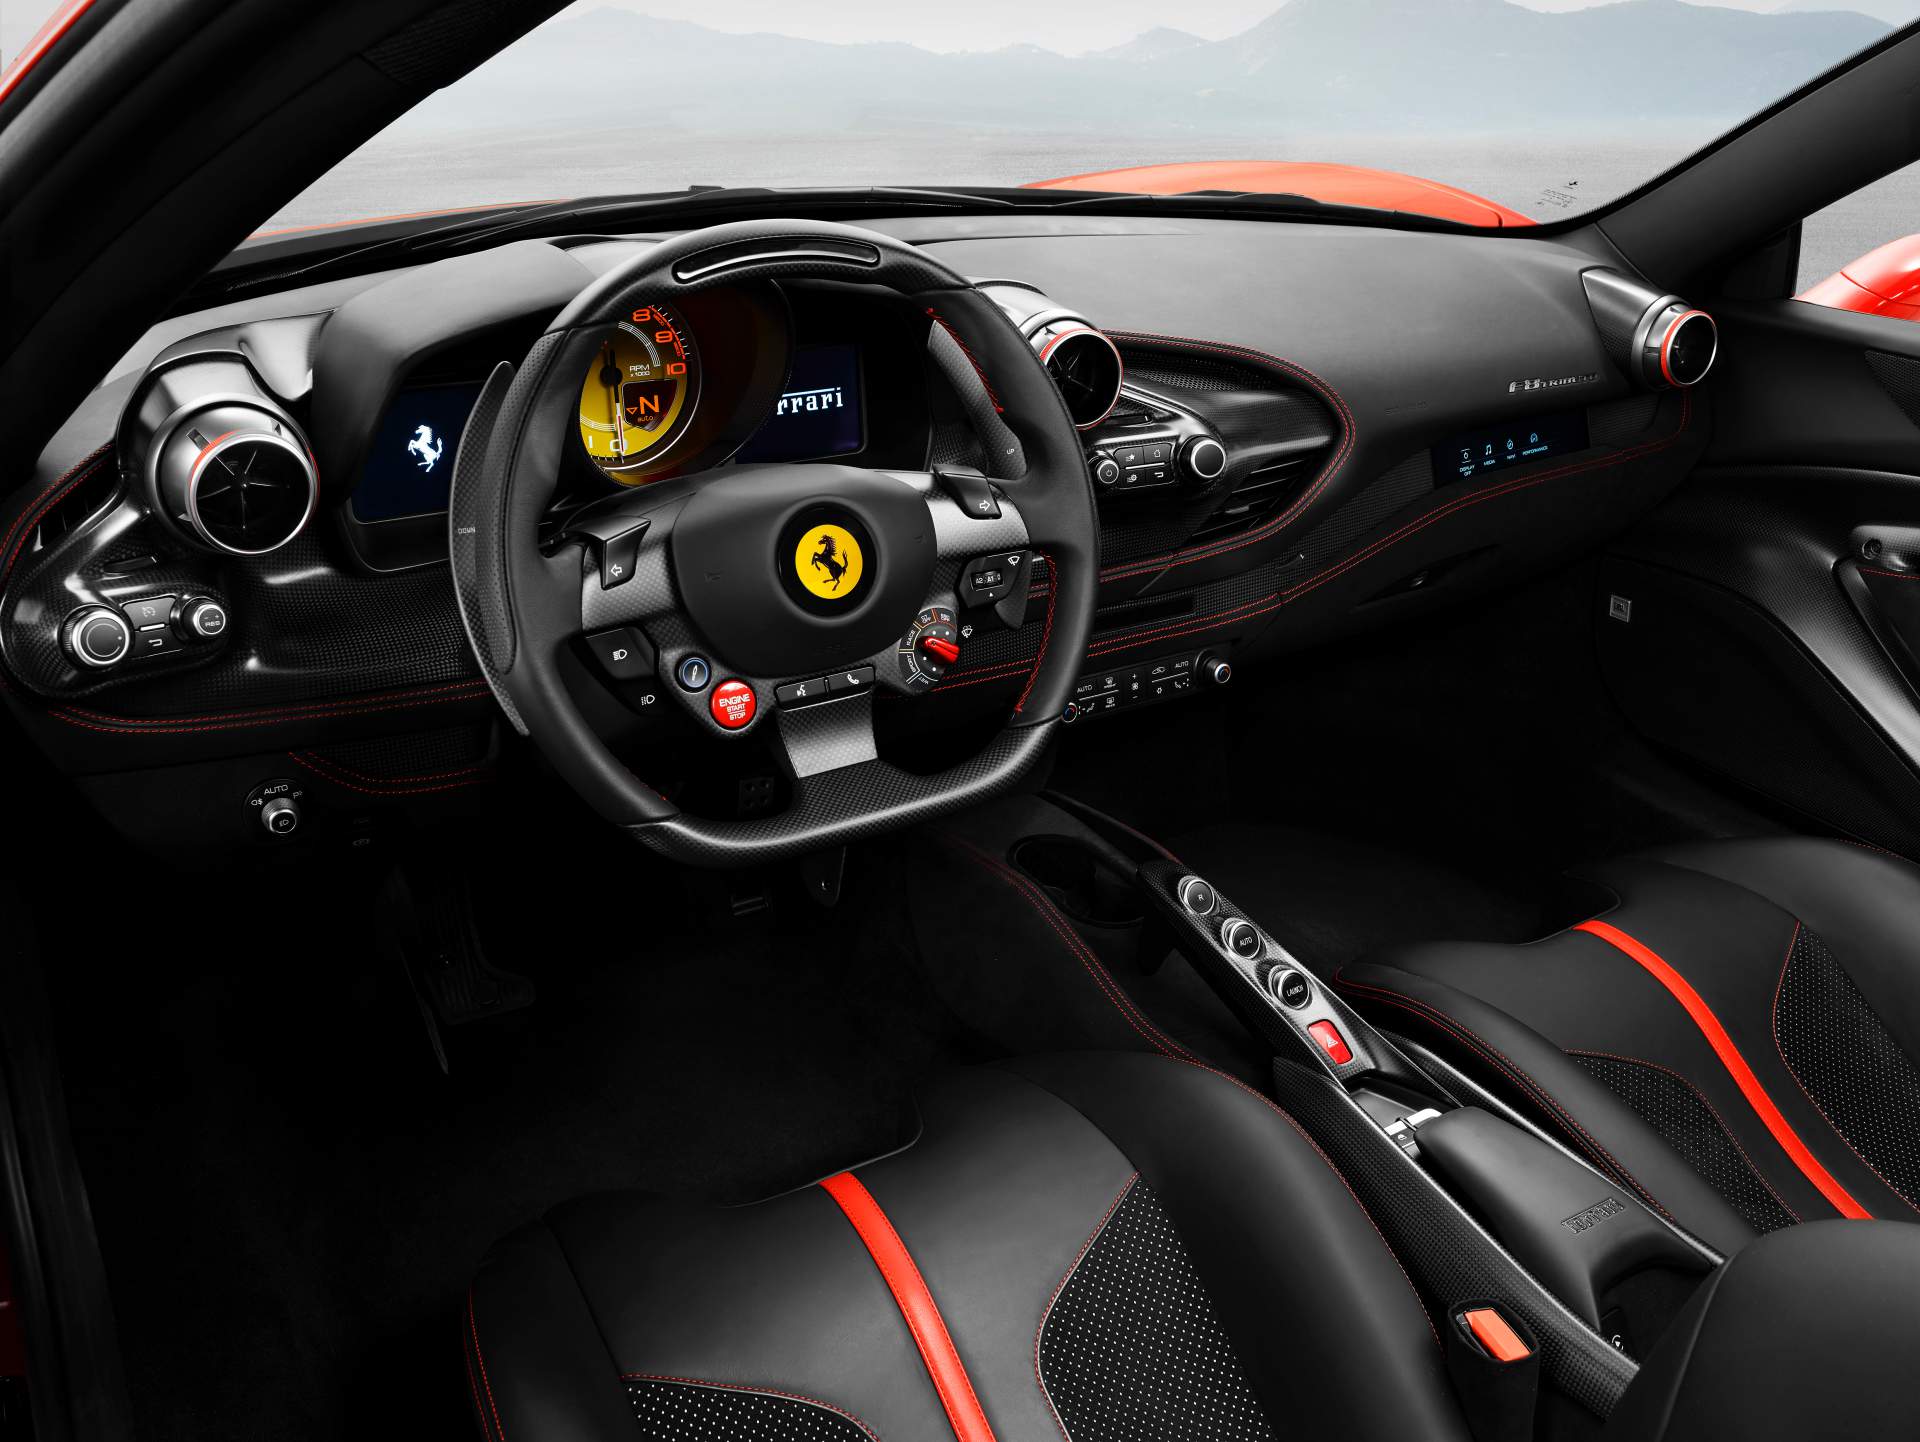 Ferrari F8 Tributo replaces 488 GTB - Makes global debut